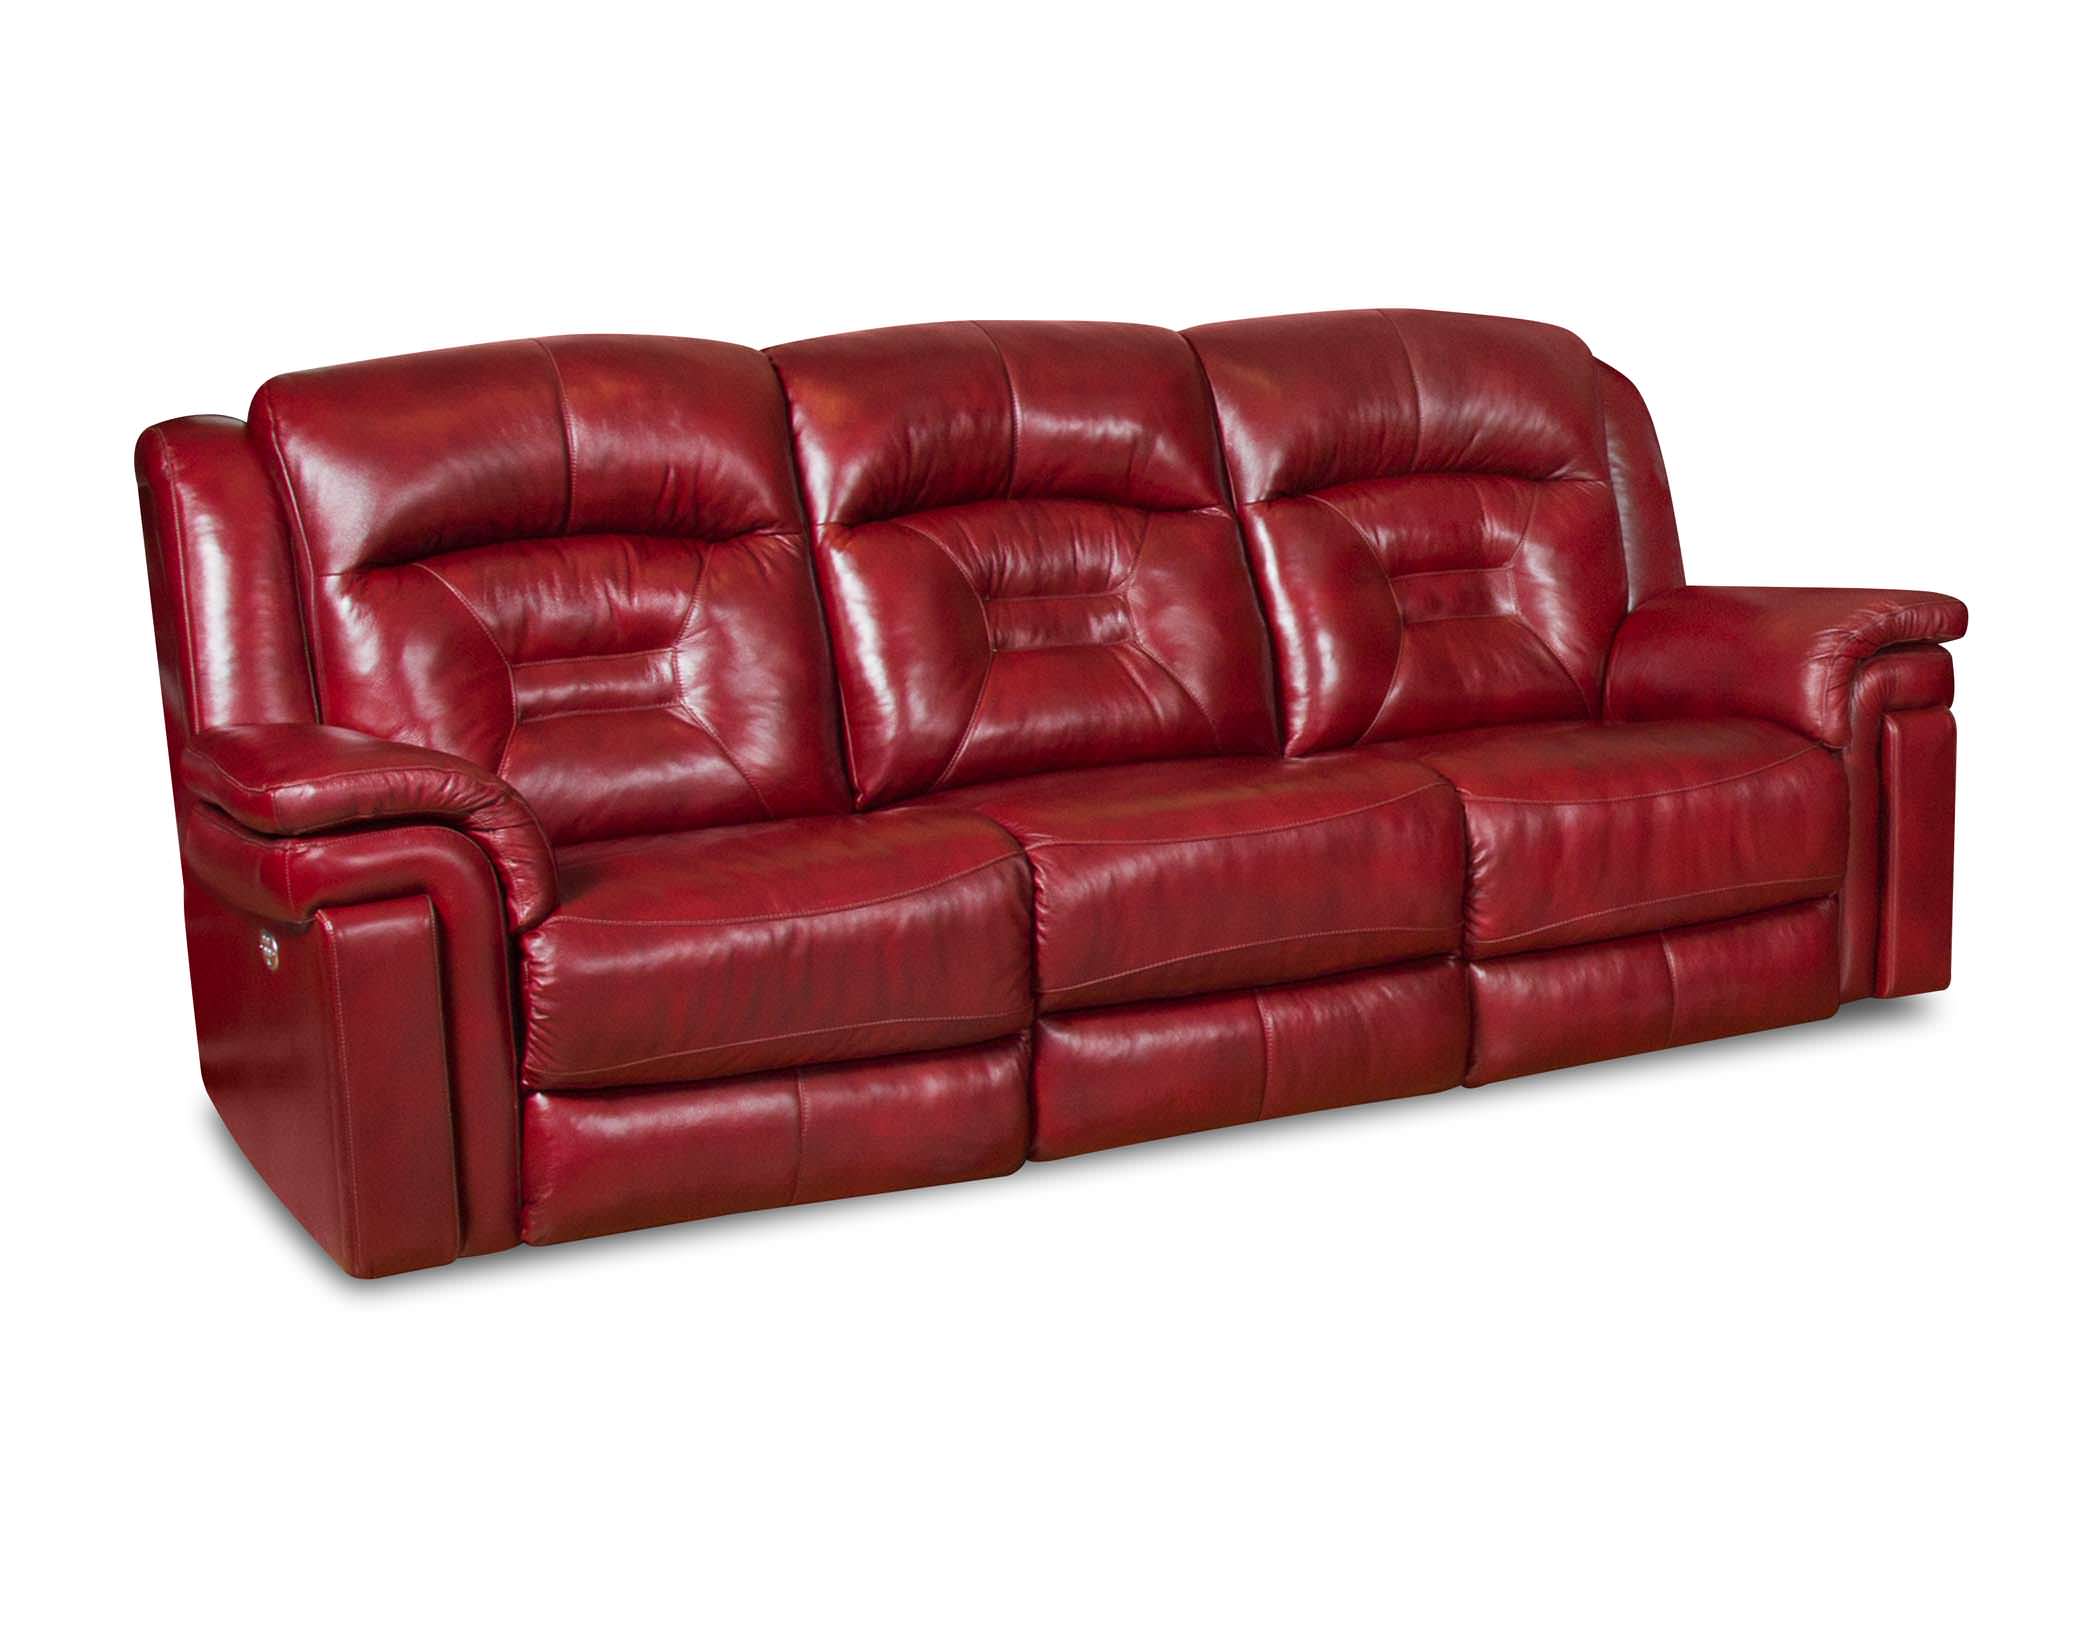 avatar leather reclining sofa